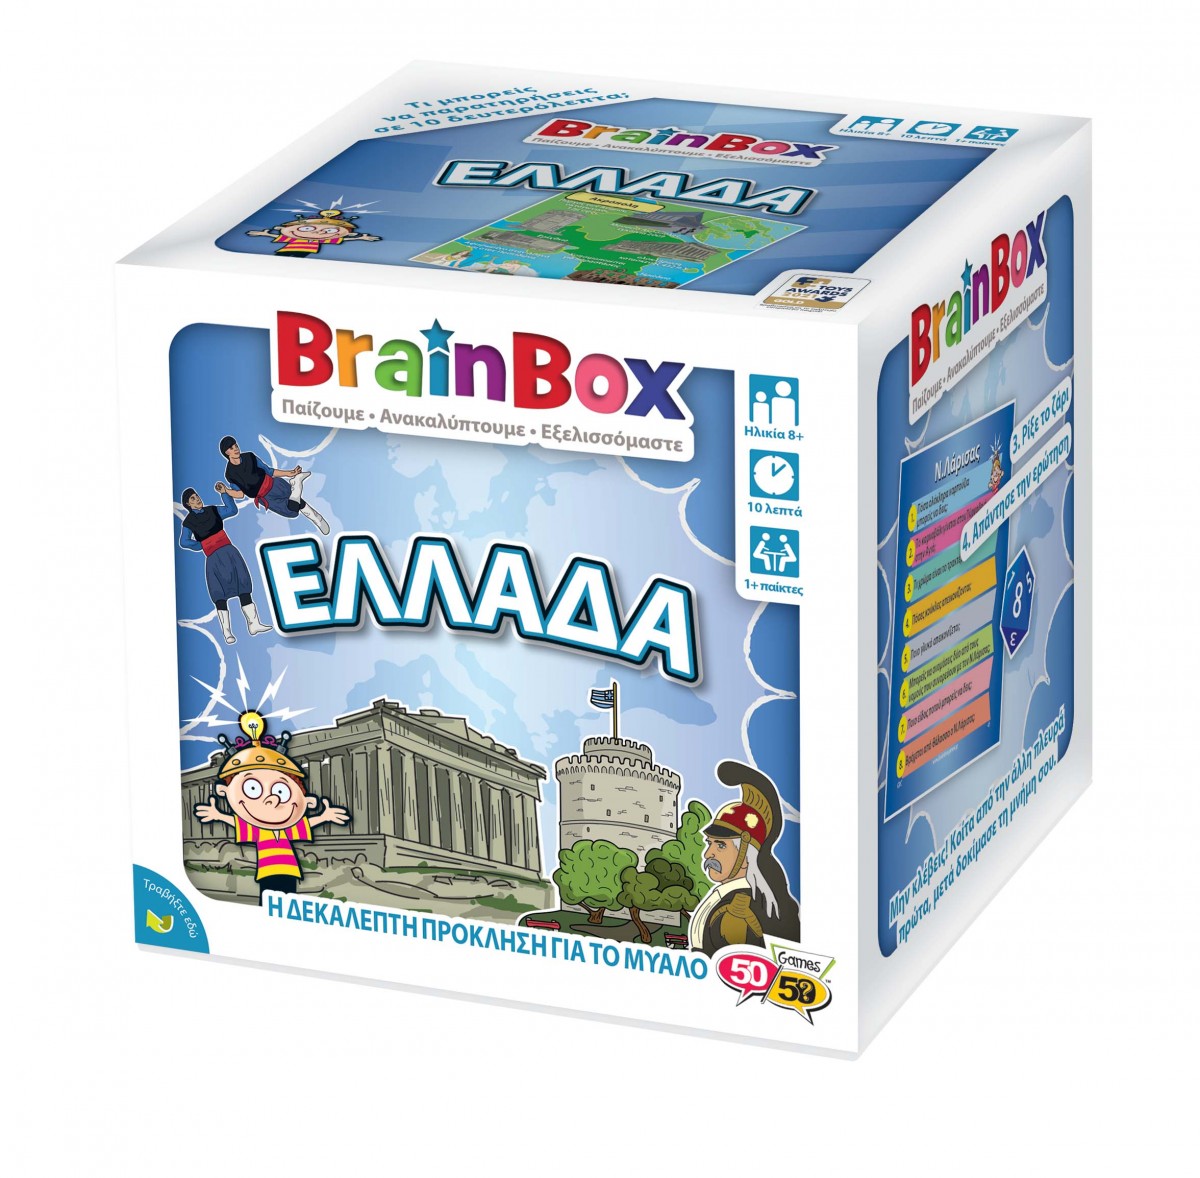 BrainBox Ελλάδα Επιτραπέζιο Παιχνίδι 93005 - BrainBox